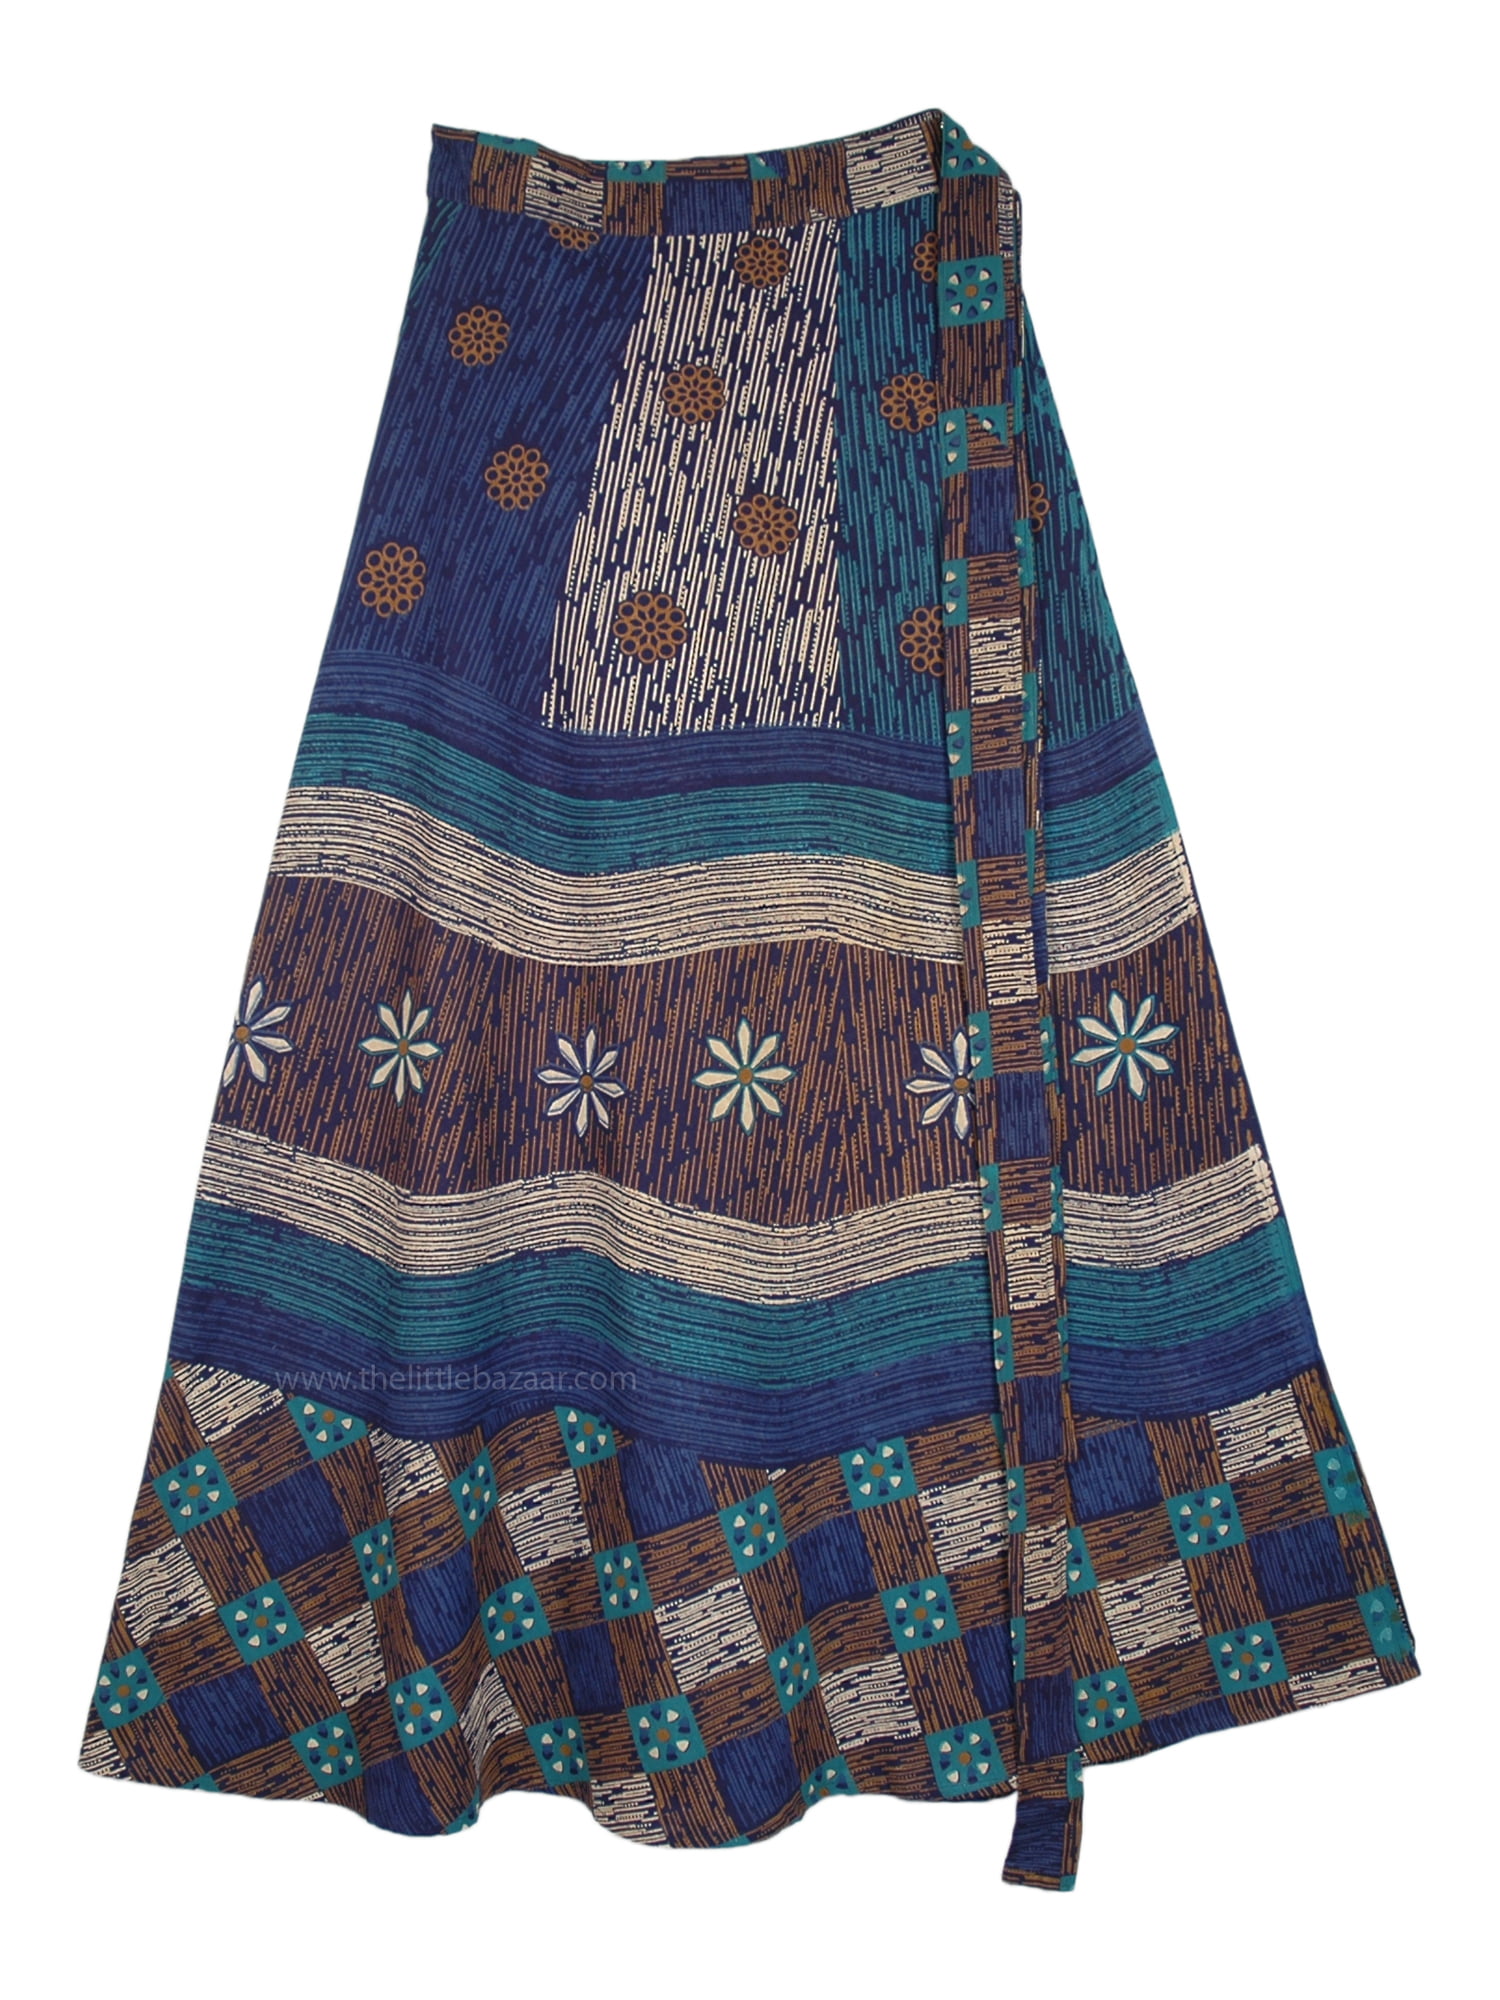 Long Cotton Indian Wrap Skirt in Boho Tribal Inspired Print - Walmart.com